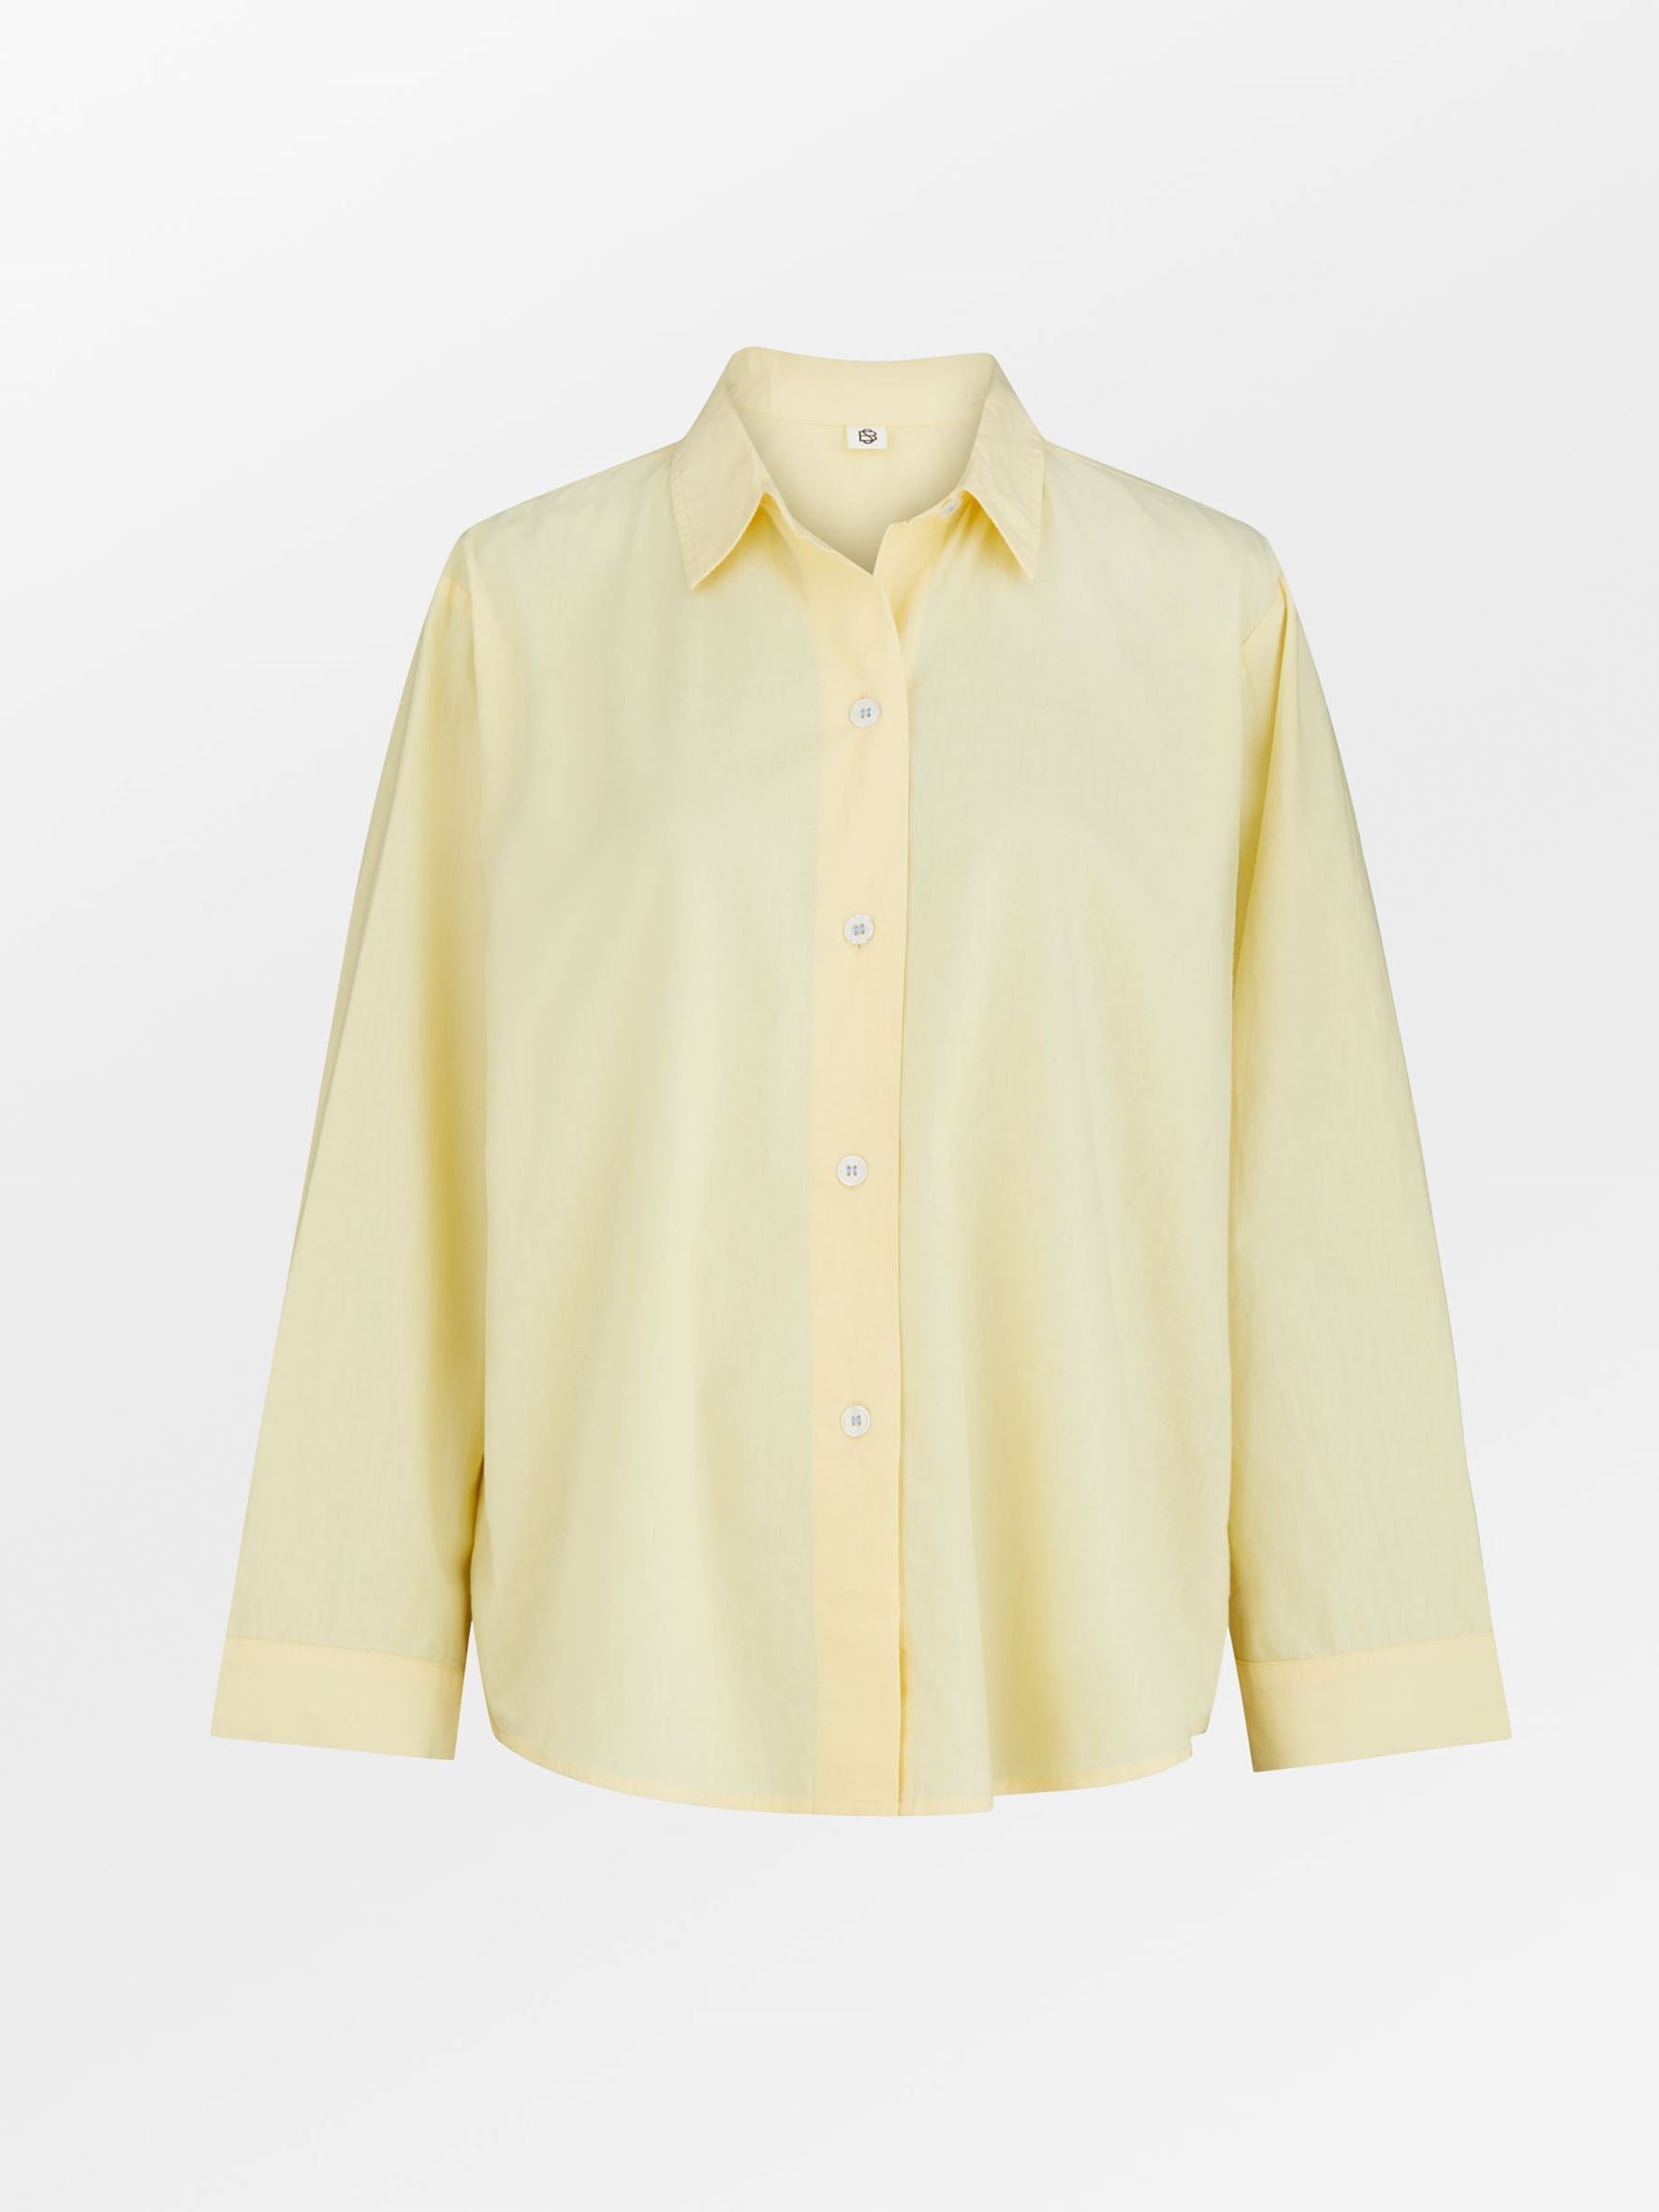 Becksöndergaard, Solid Wide Shirt - Popcorn Yellow, archive, sale, sale, archive